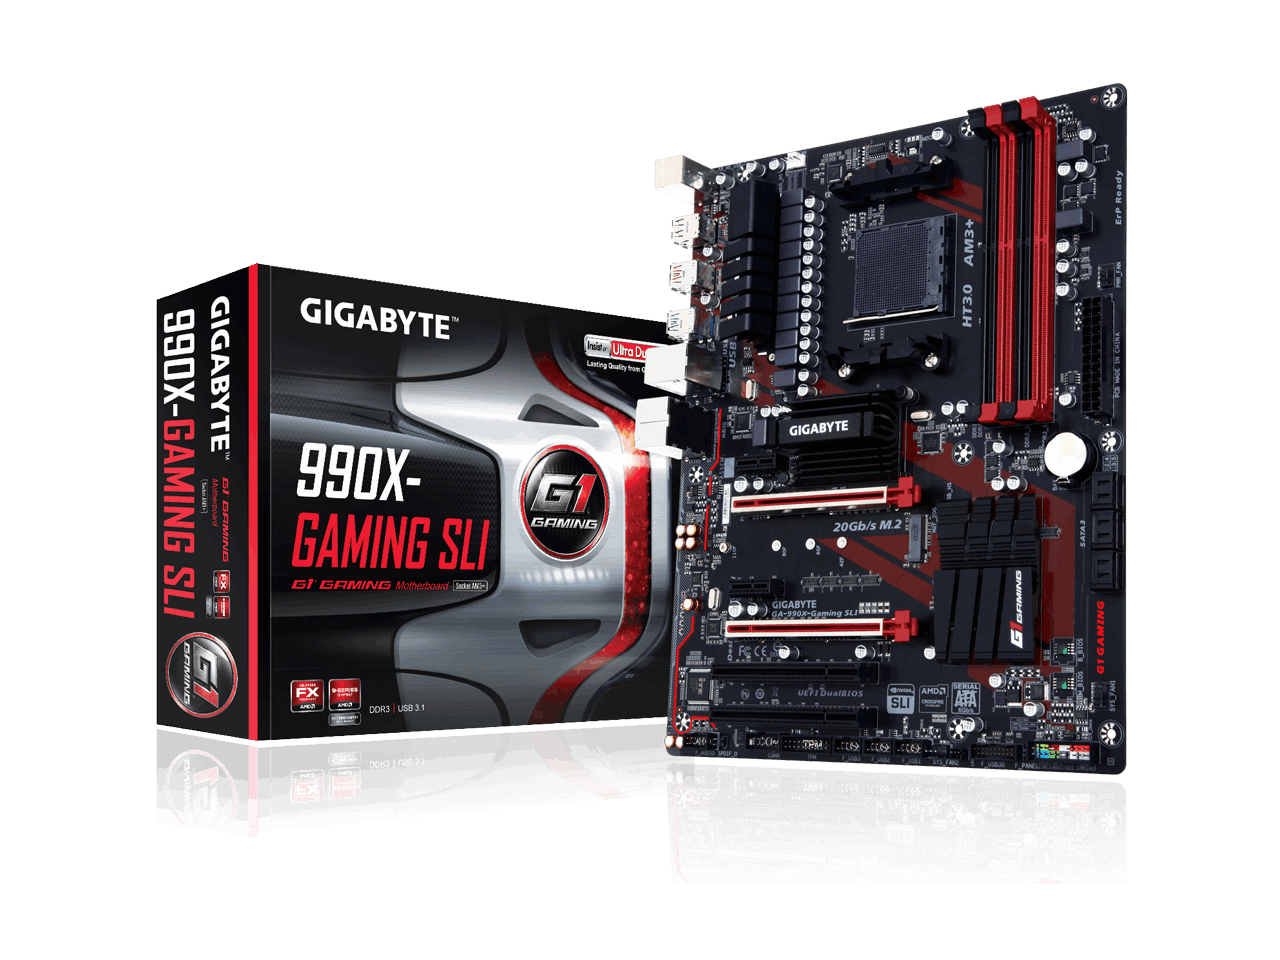 Gigabyte 990fx. Fx990 am3+. Gigabyte ga AMD. Материнская плата Gigabyte ga-990fx-Gaming. Gigabyte gaming 1